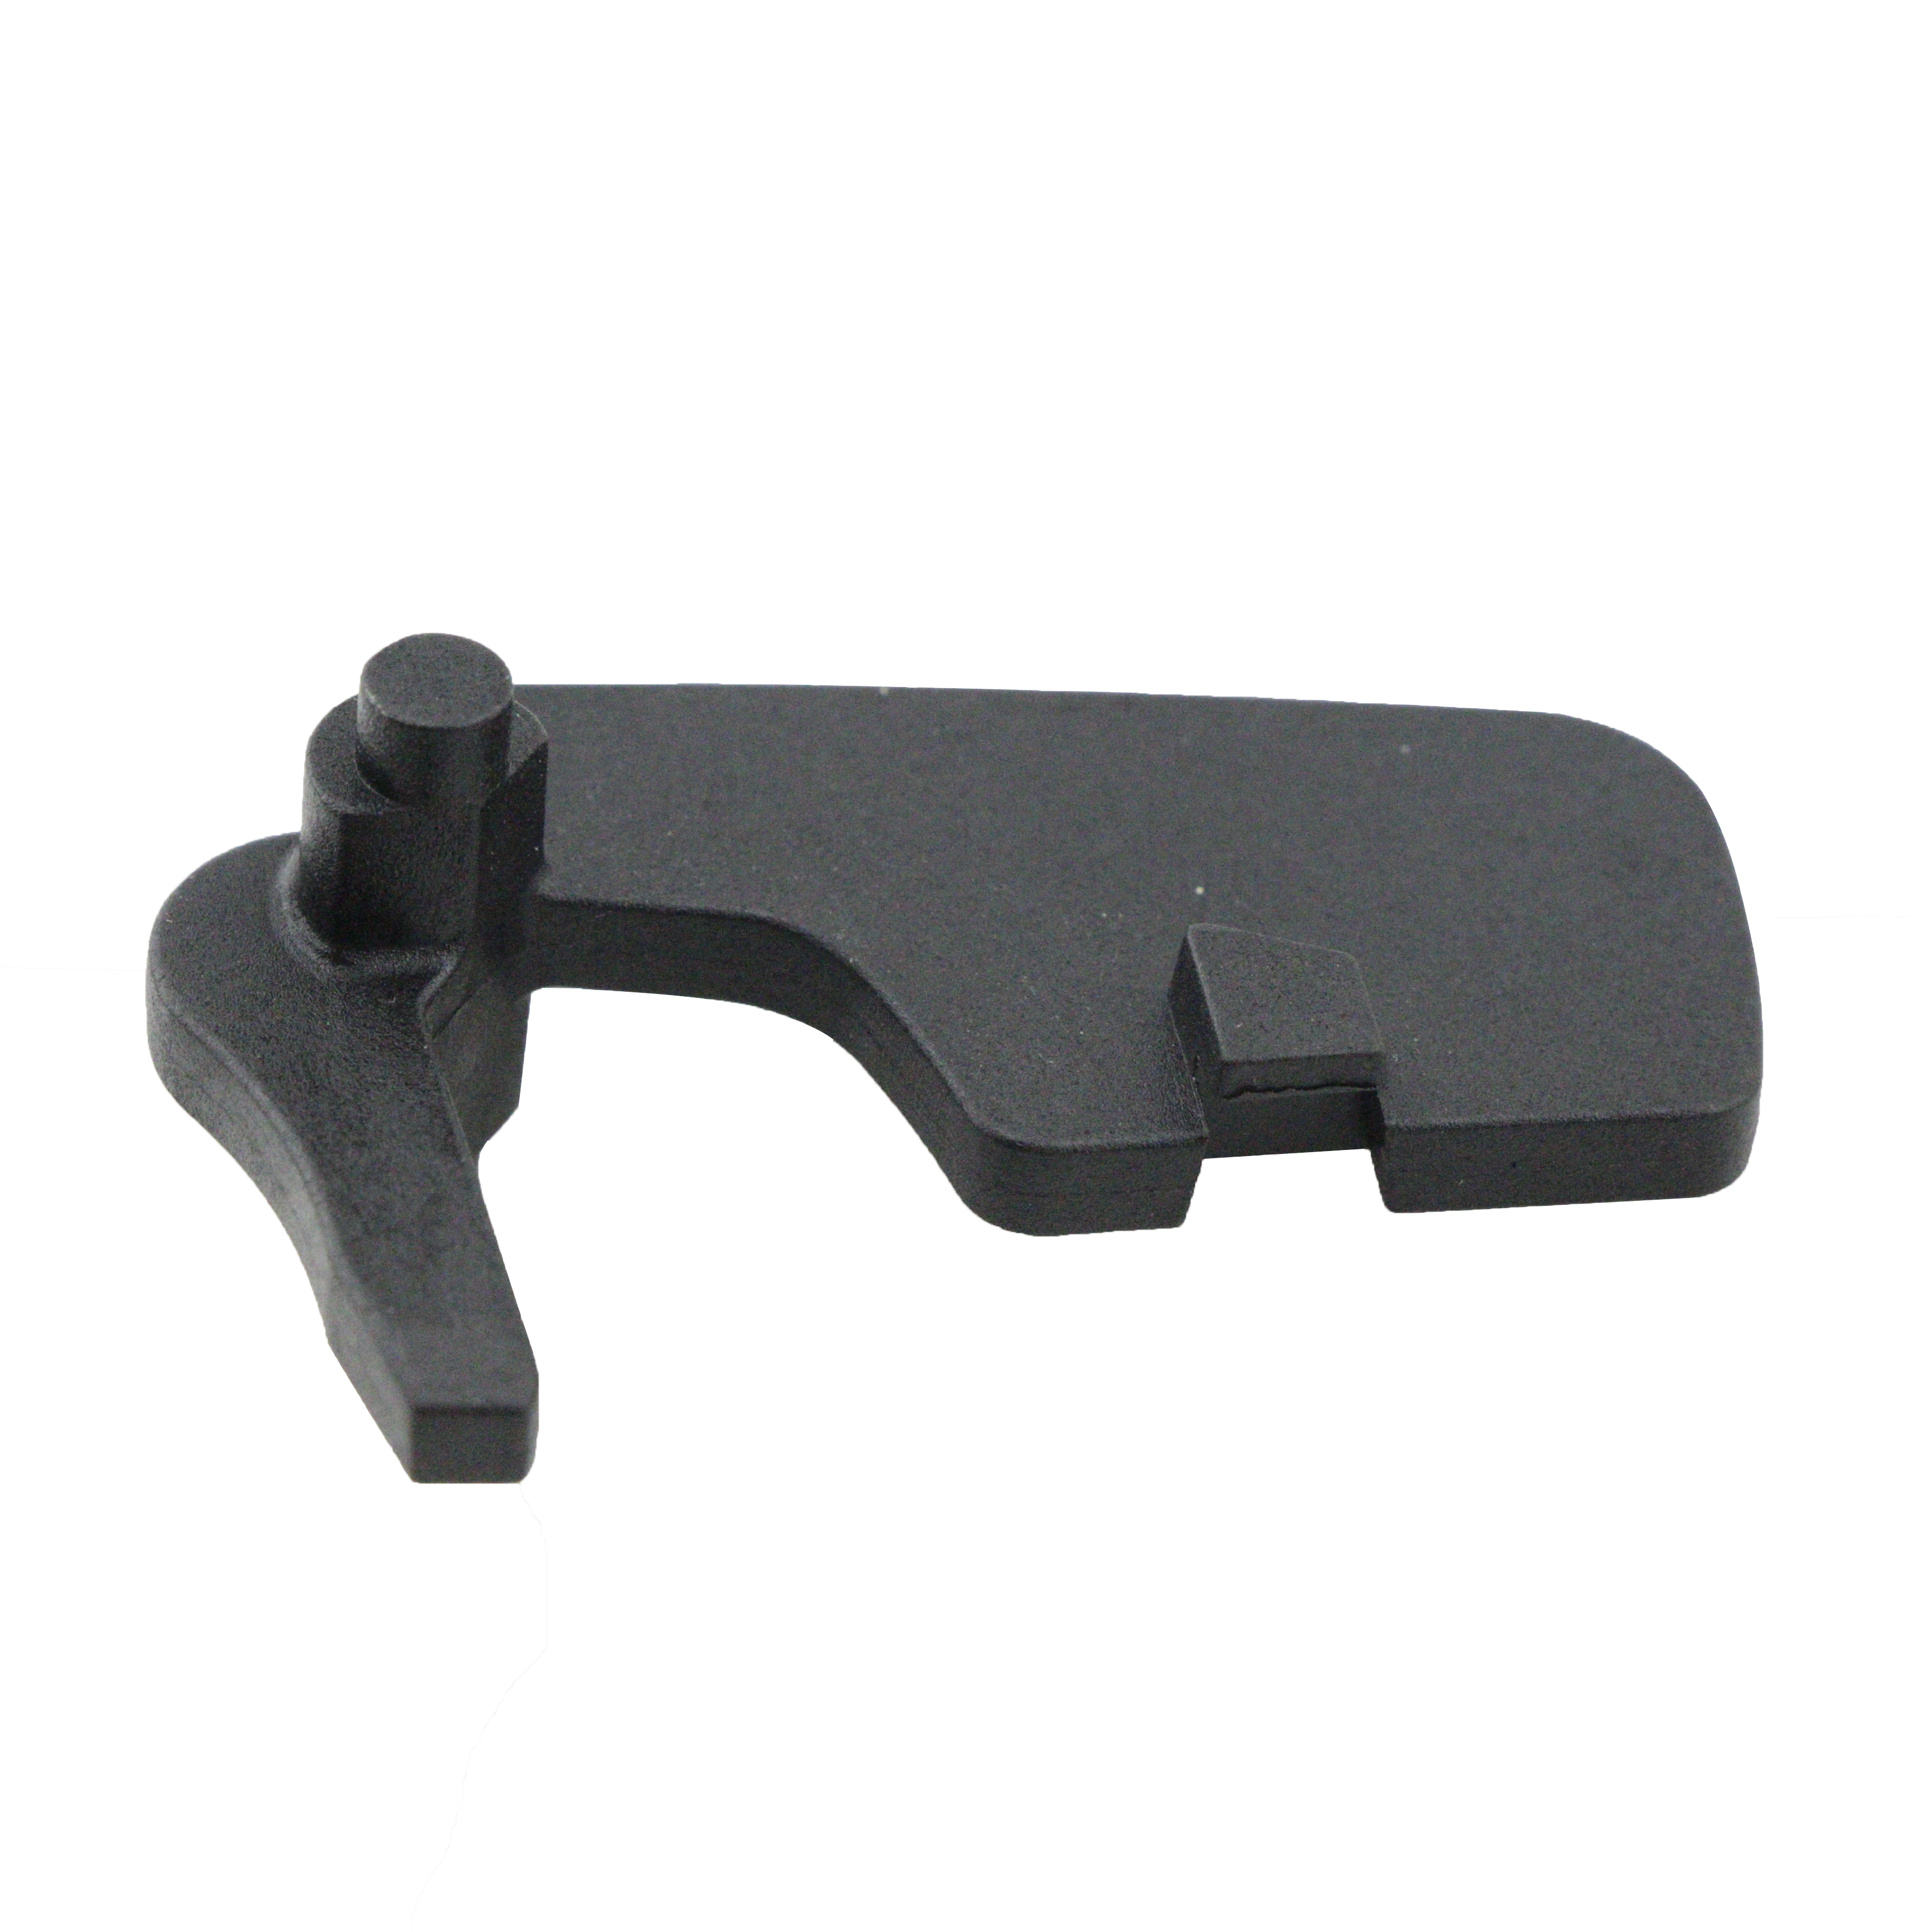 Handle Trigger Interlock Lever For Stihl TS400 Concrete Cut Off Saw 4223 182 0800